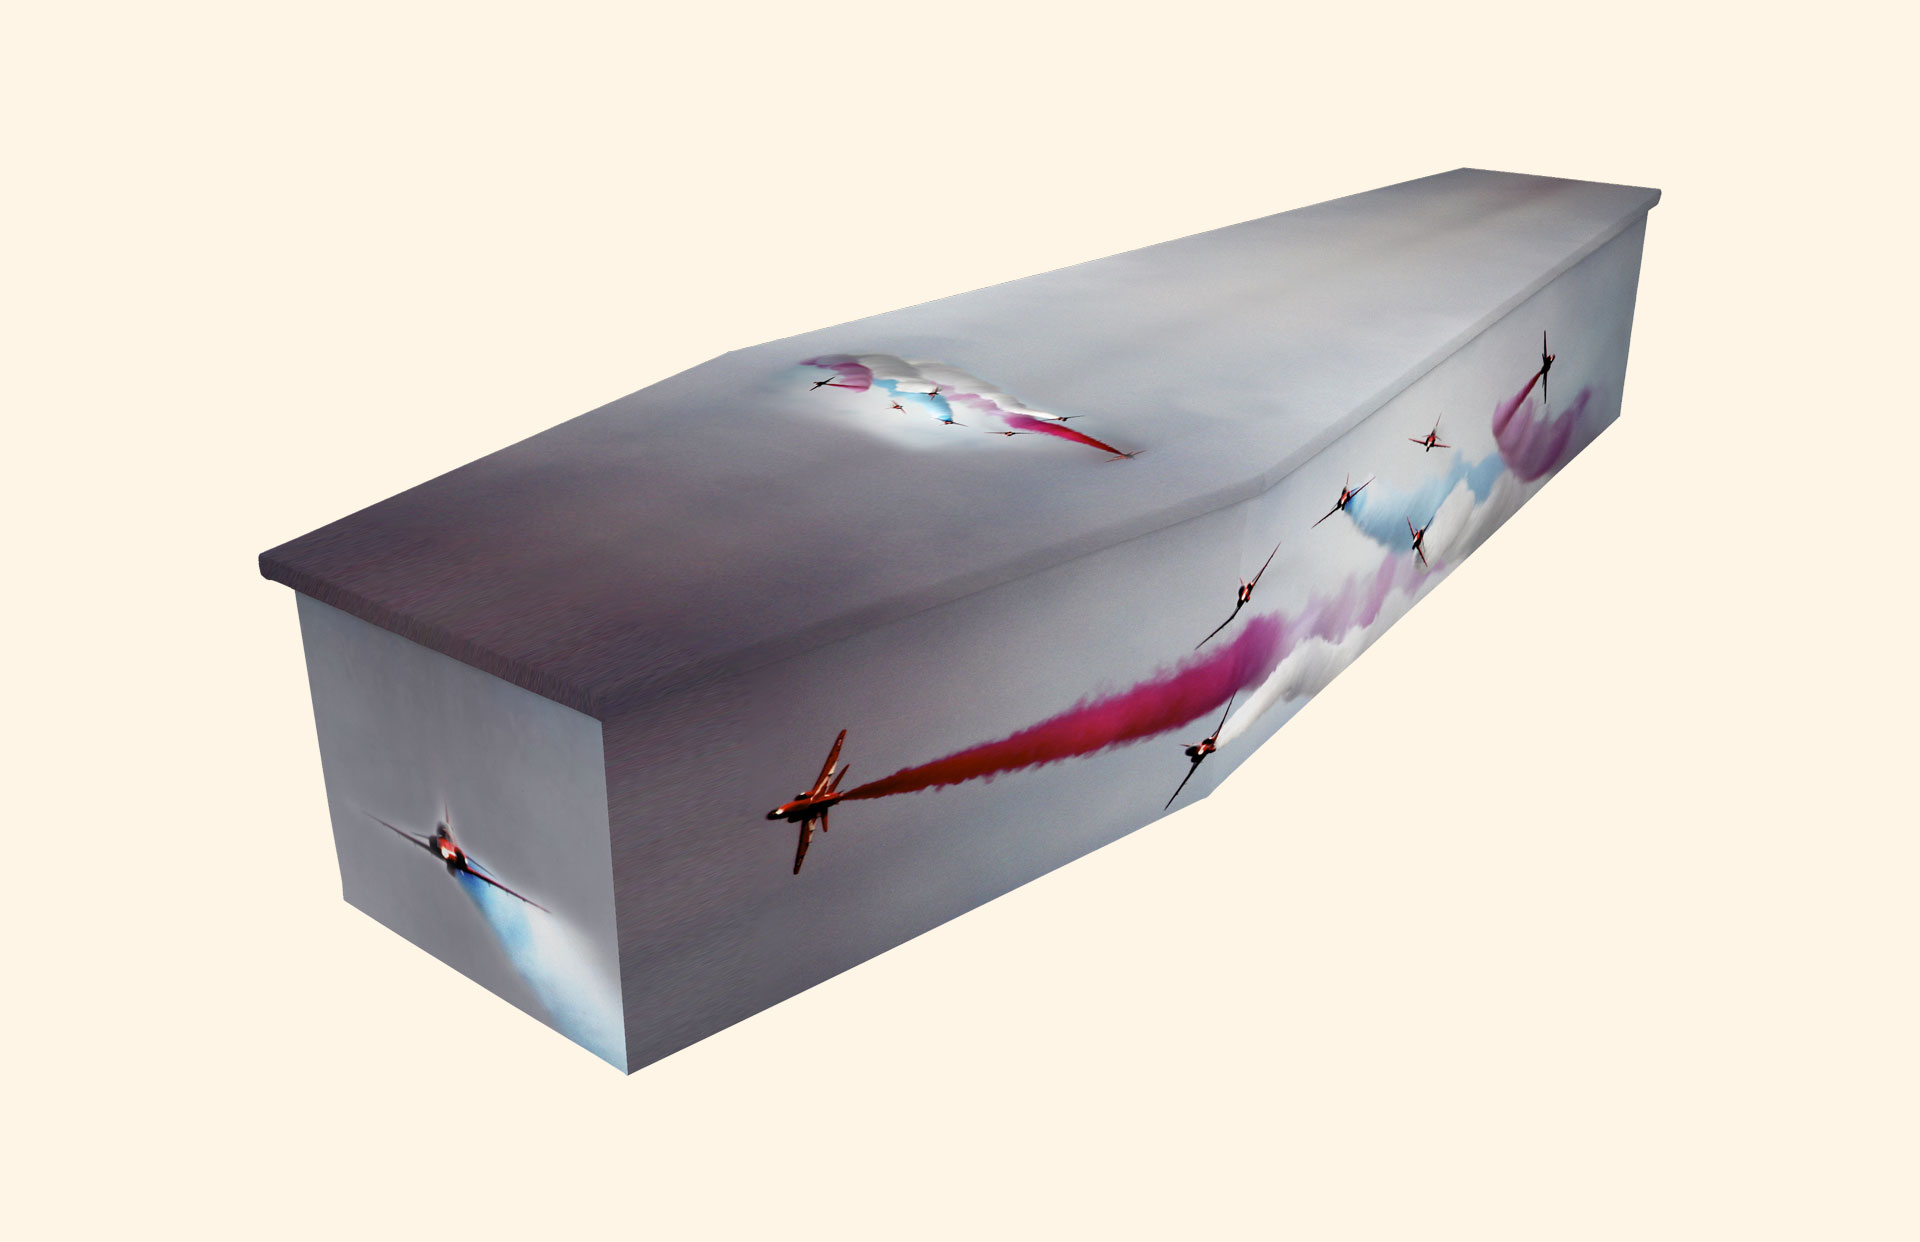 Red Arrows design on a cardboard coffin